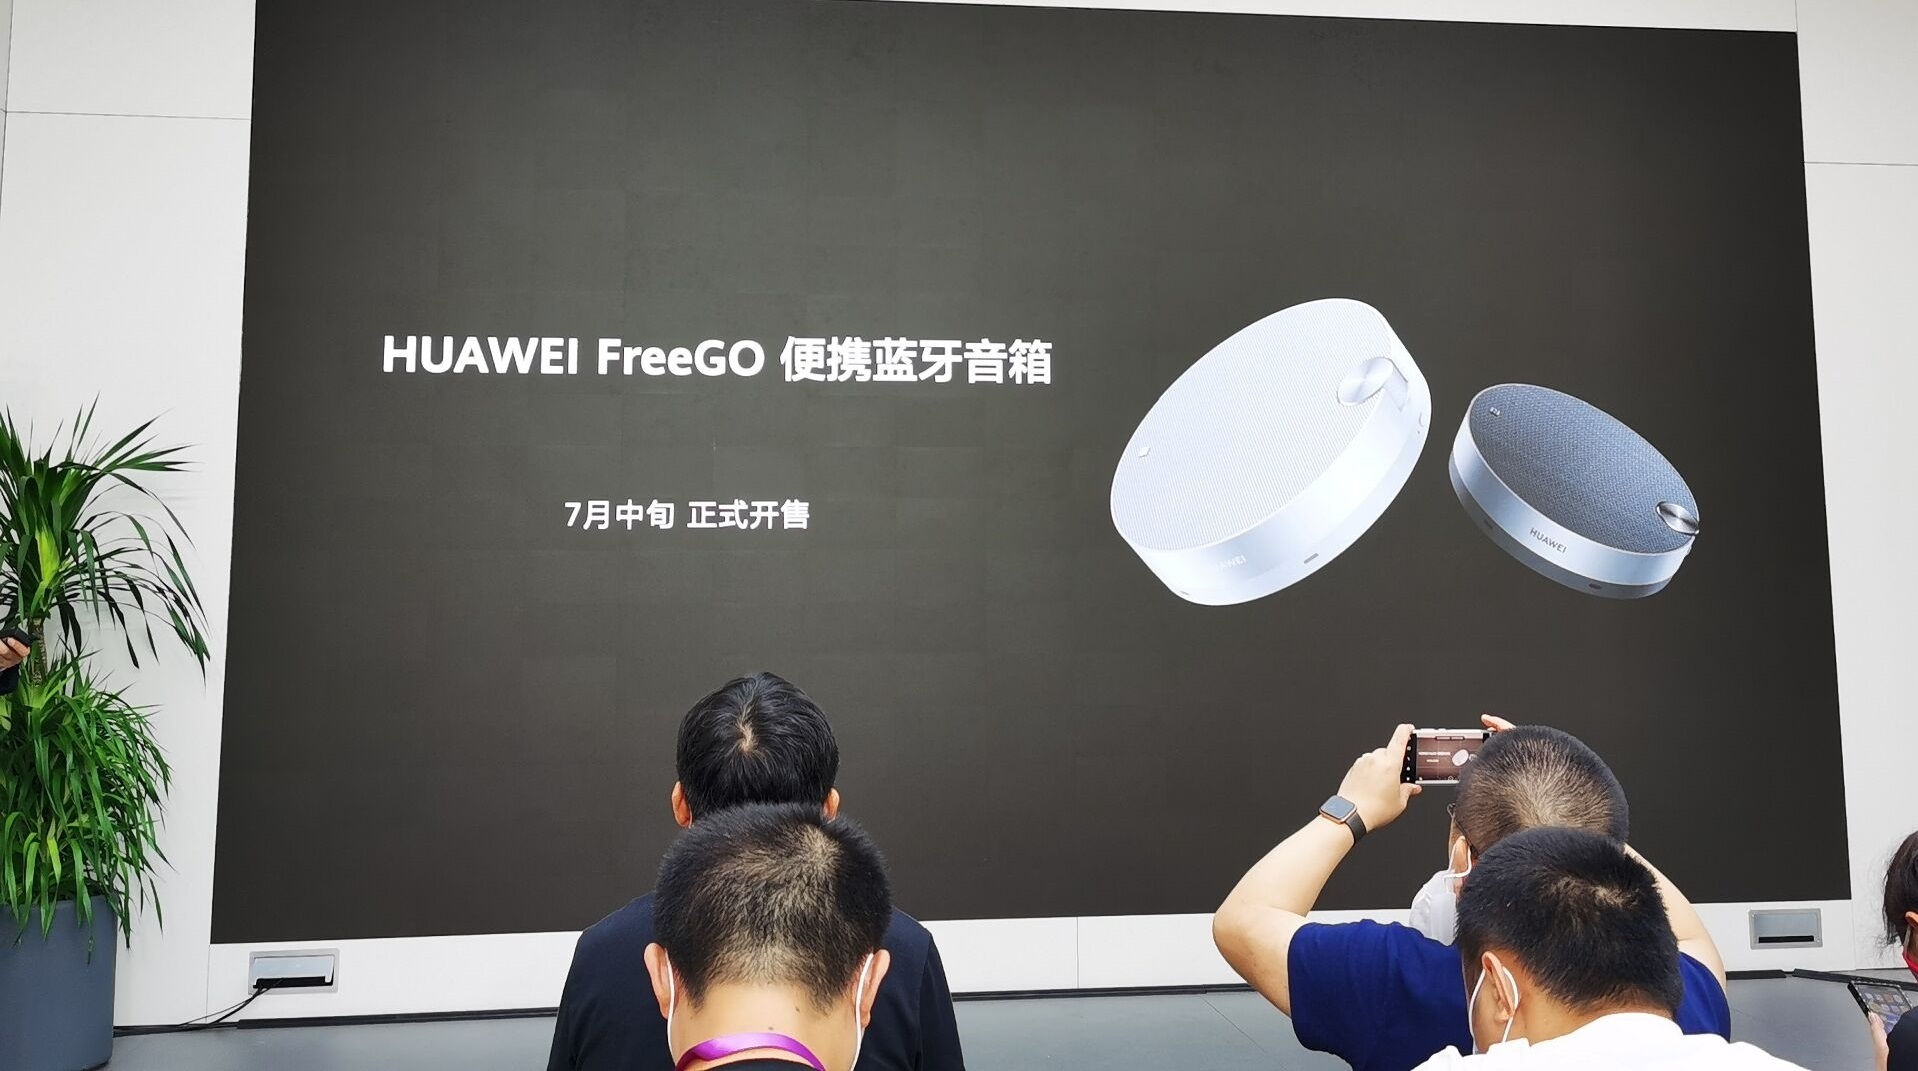 Huawei FreeGo